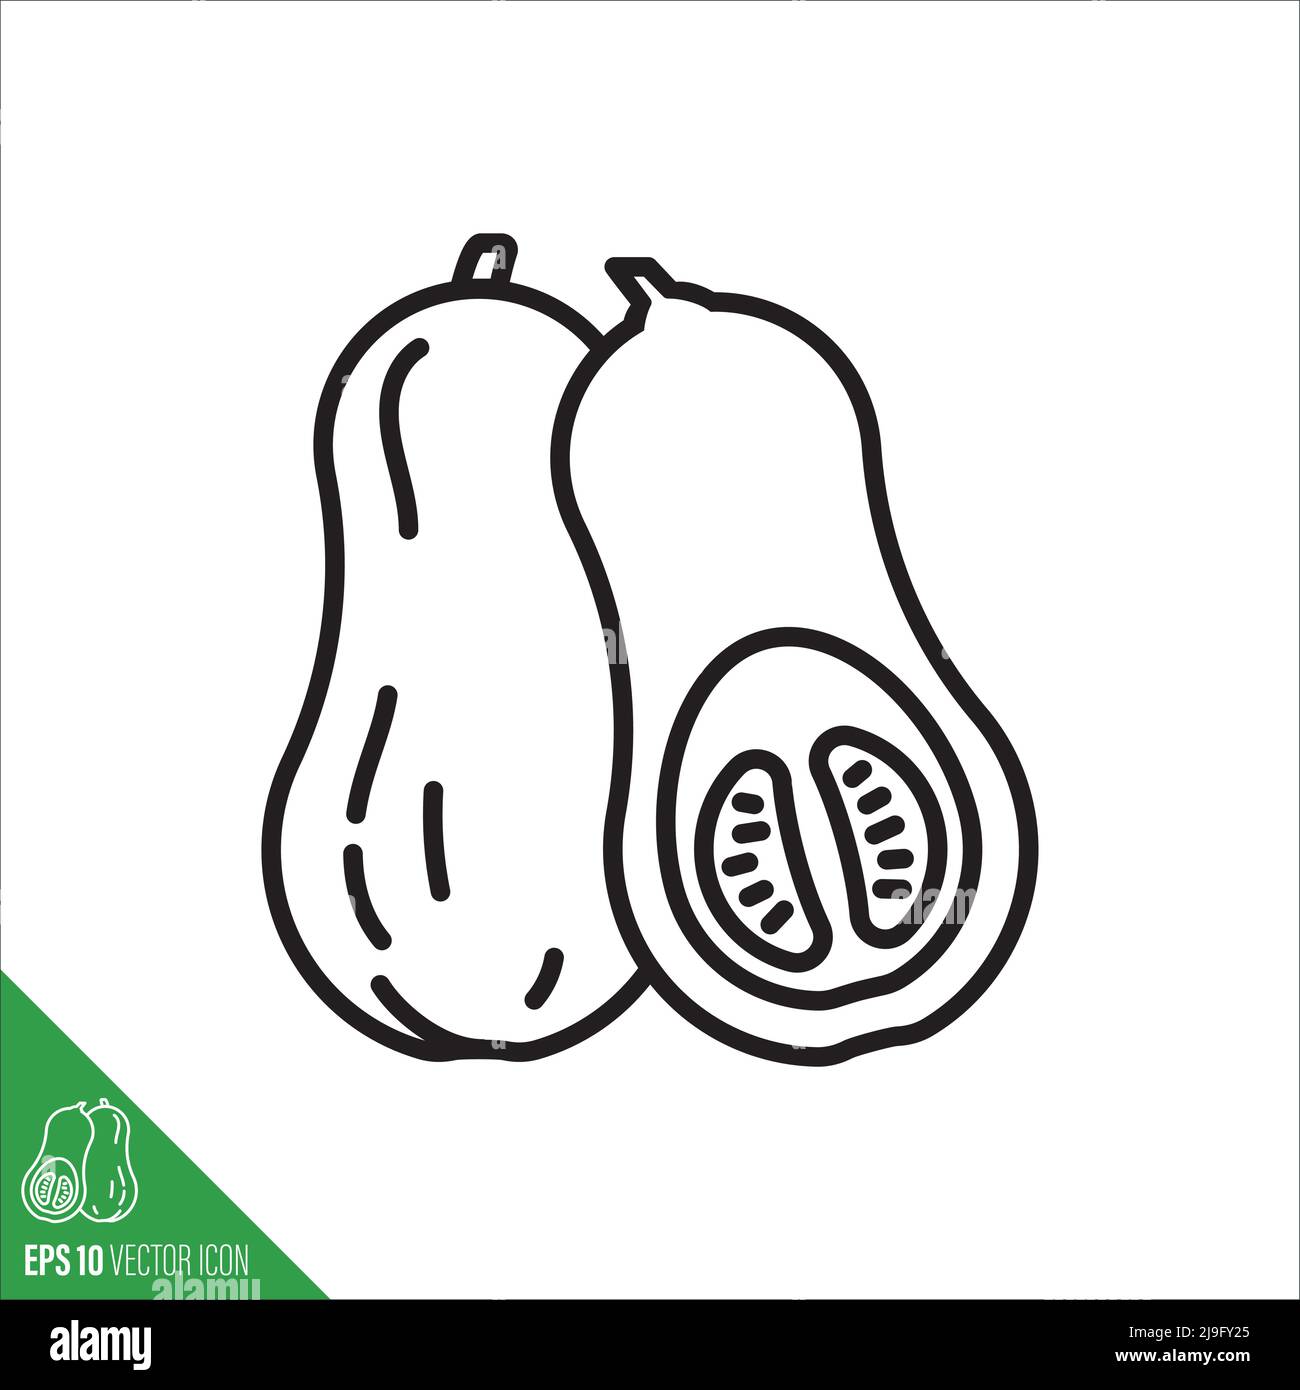 Butternut squash or pumpkin vegetable icon, outline style vector illustration Stock Vector